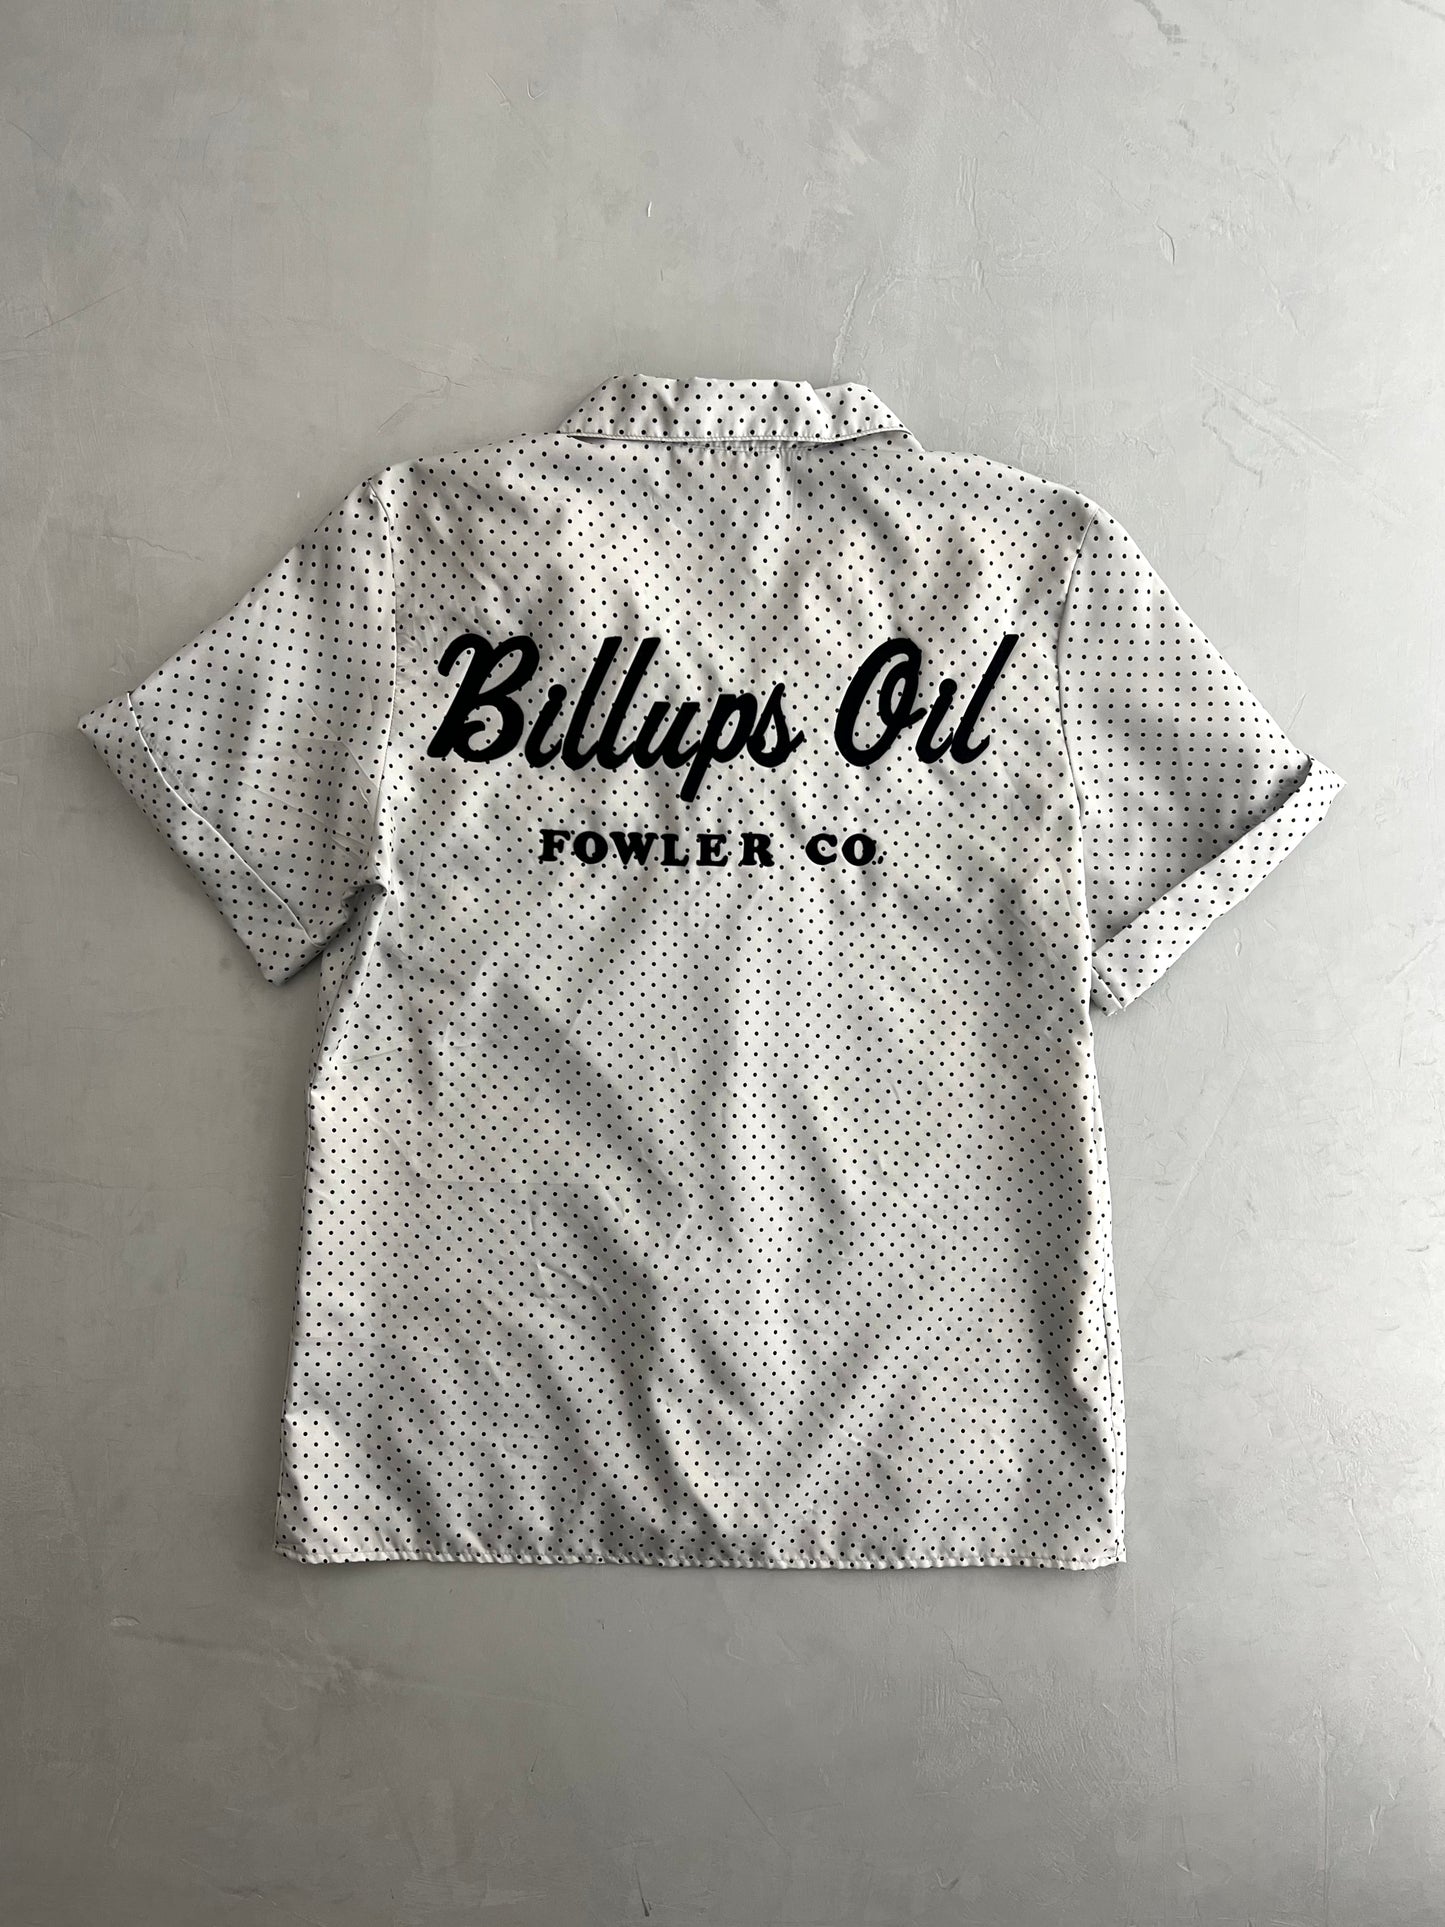 Billups Oil Bowling Shirt [M]